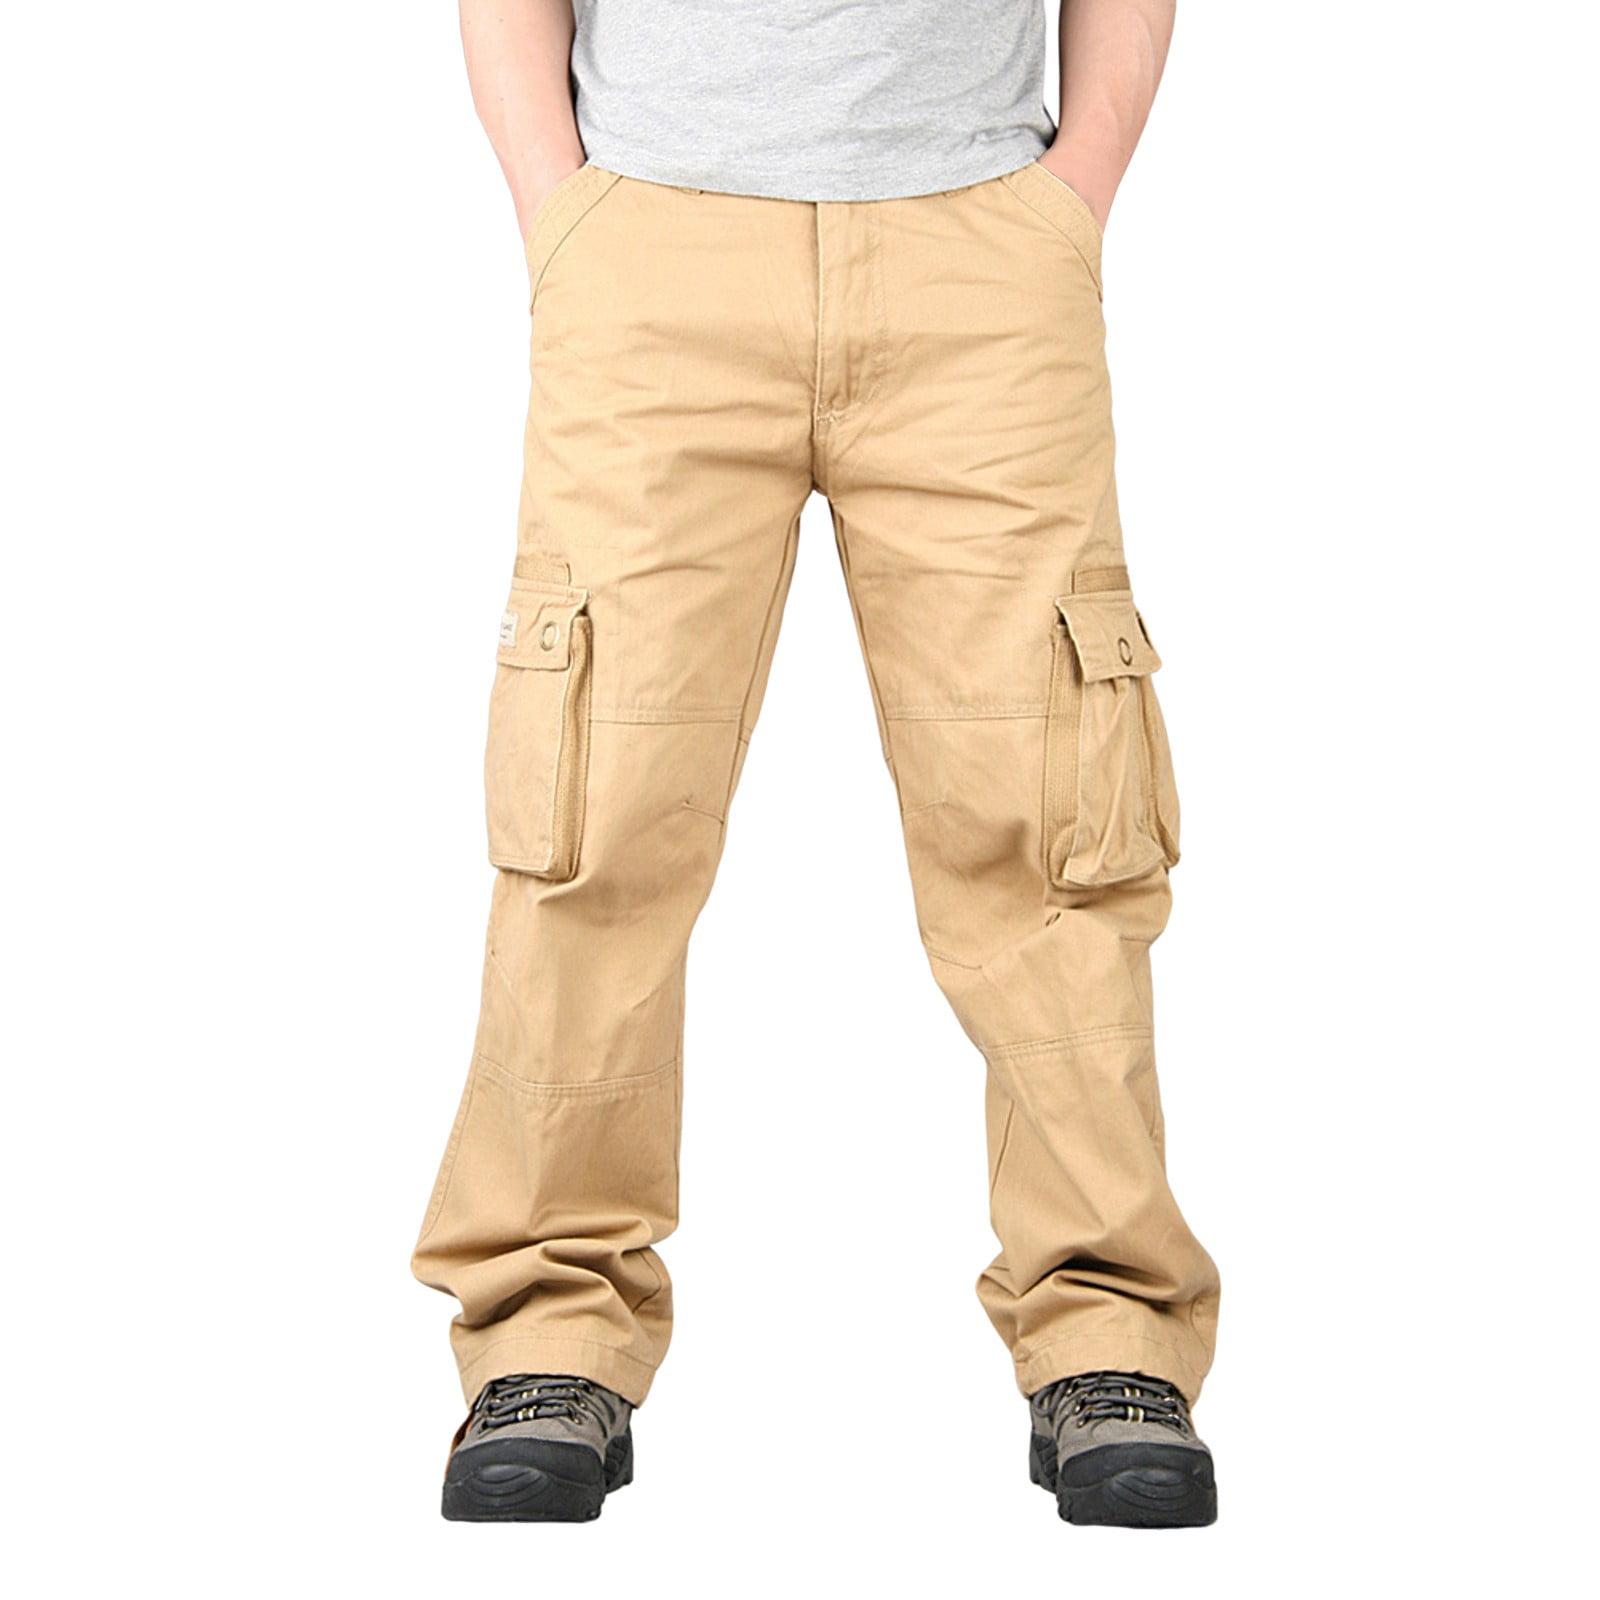 WEAIXIMIUNG Men's Cargo Pants Size 38 X 30 Men's Casual Cargo Pants Hiking  Pants Workout Joggers Sweatpants For Men Mens Cargo Pants Elastic Waist